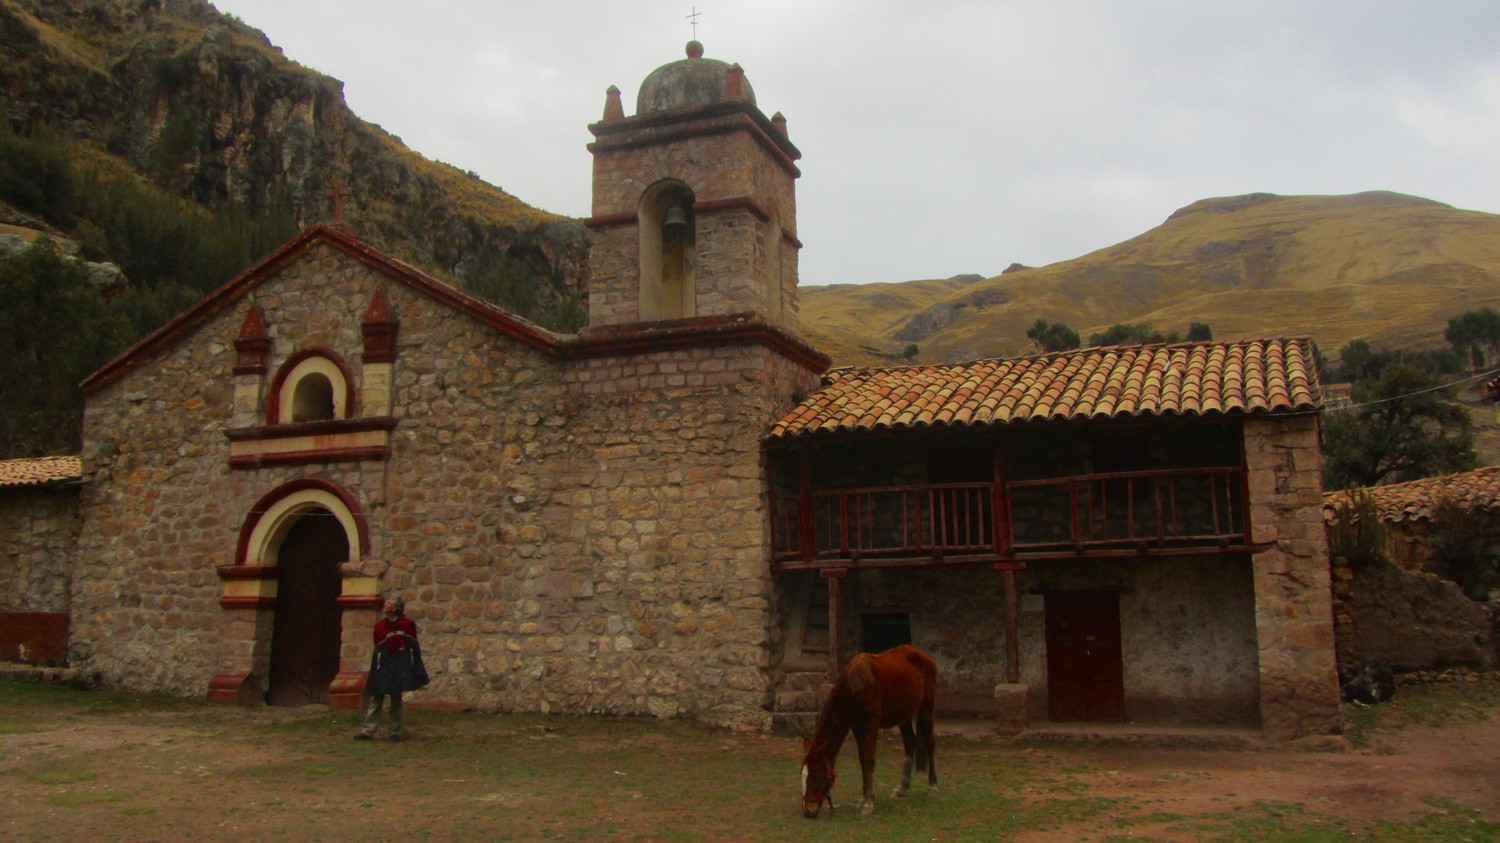 Church of Sacsamarca